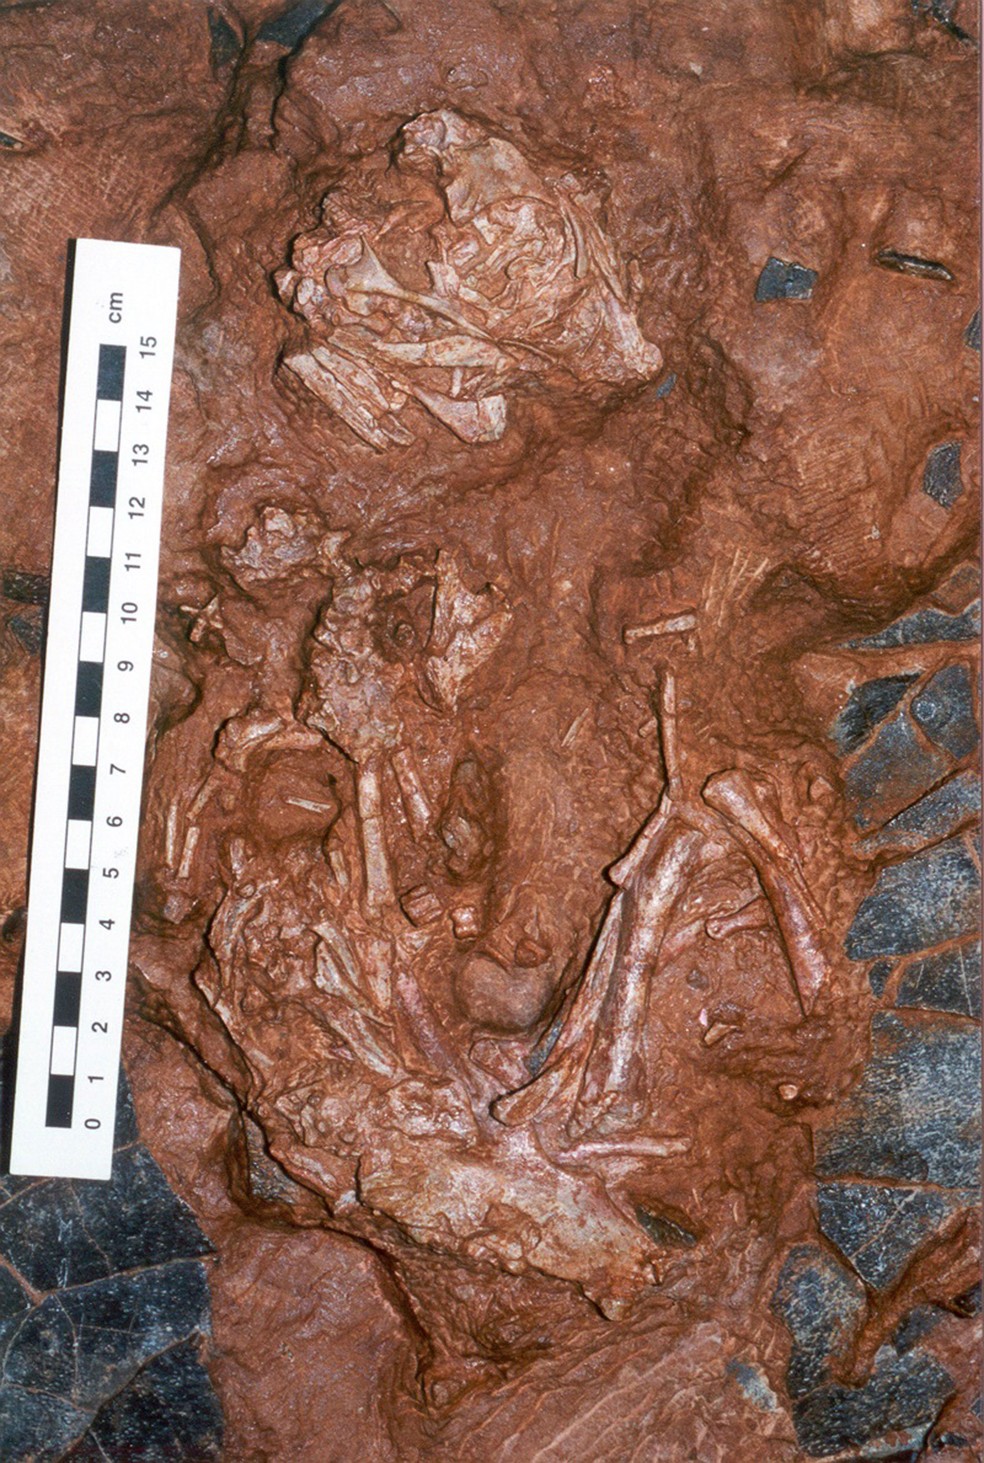  Fóssil de embrião de dinossauro Beibelong é visto sobre cascas de ovos (fragmentos cinza-escuros)  (Foto: Darla Zelenitsky, University of Calgary)